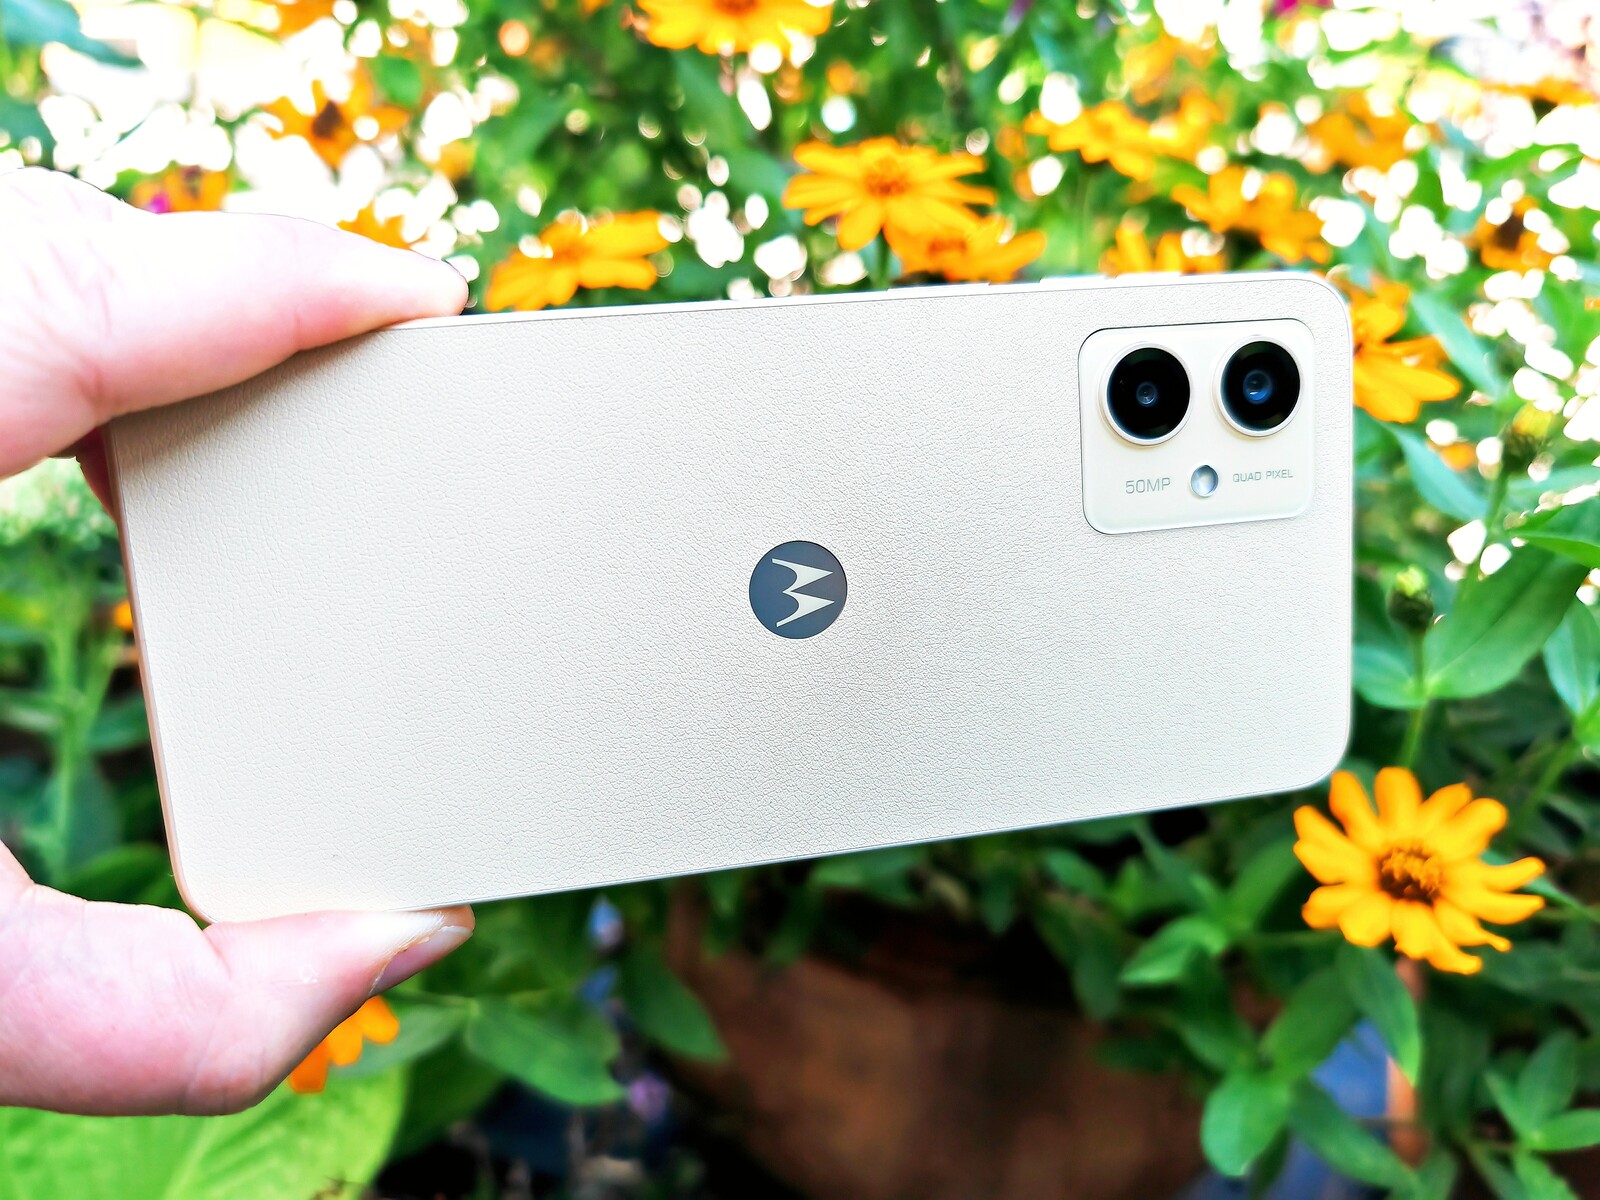 Motorola Moto G14 smartphone review - Storage giant in vegan leather -   Reviews